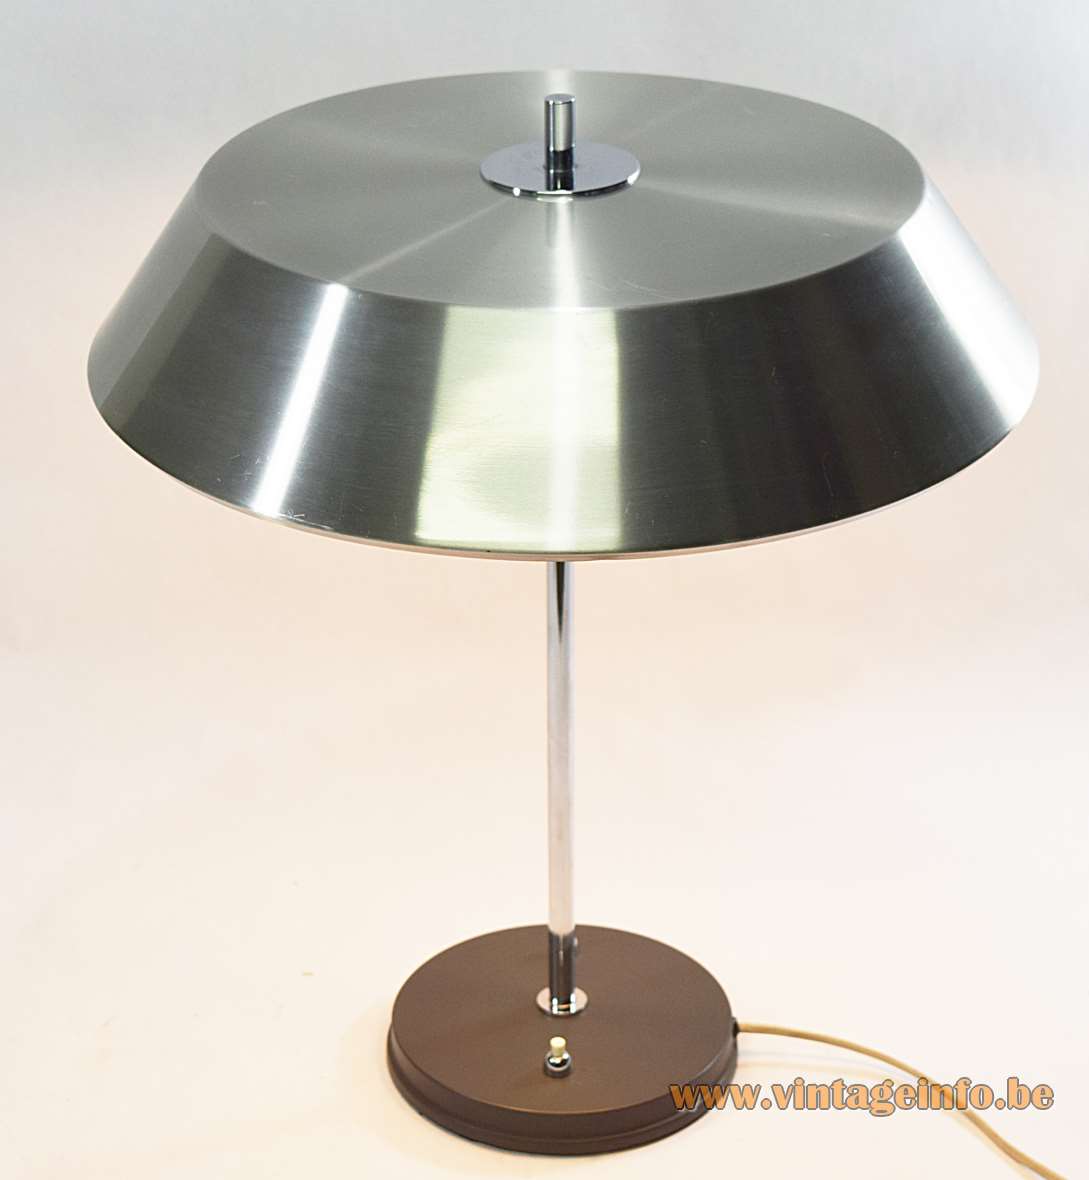 Philips President desk lamp design: Louis Kalff aluminium lampshade chrome rod 2 switches E27 sockets 1960s 1970s